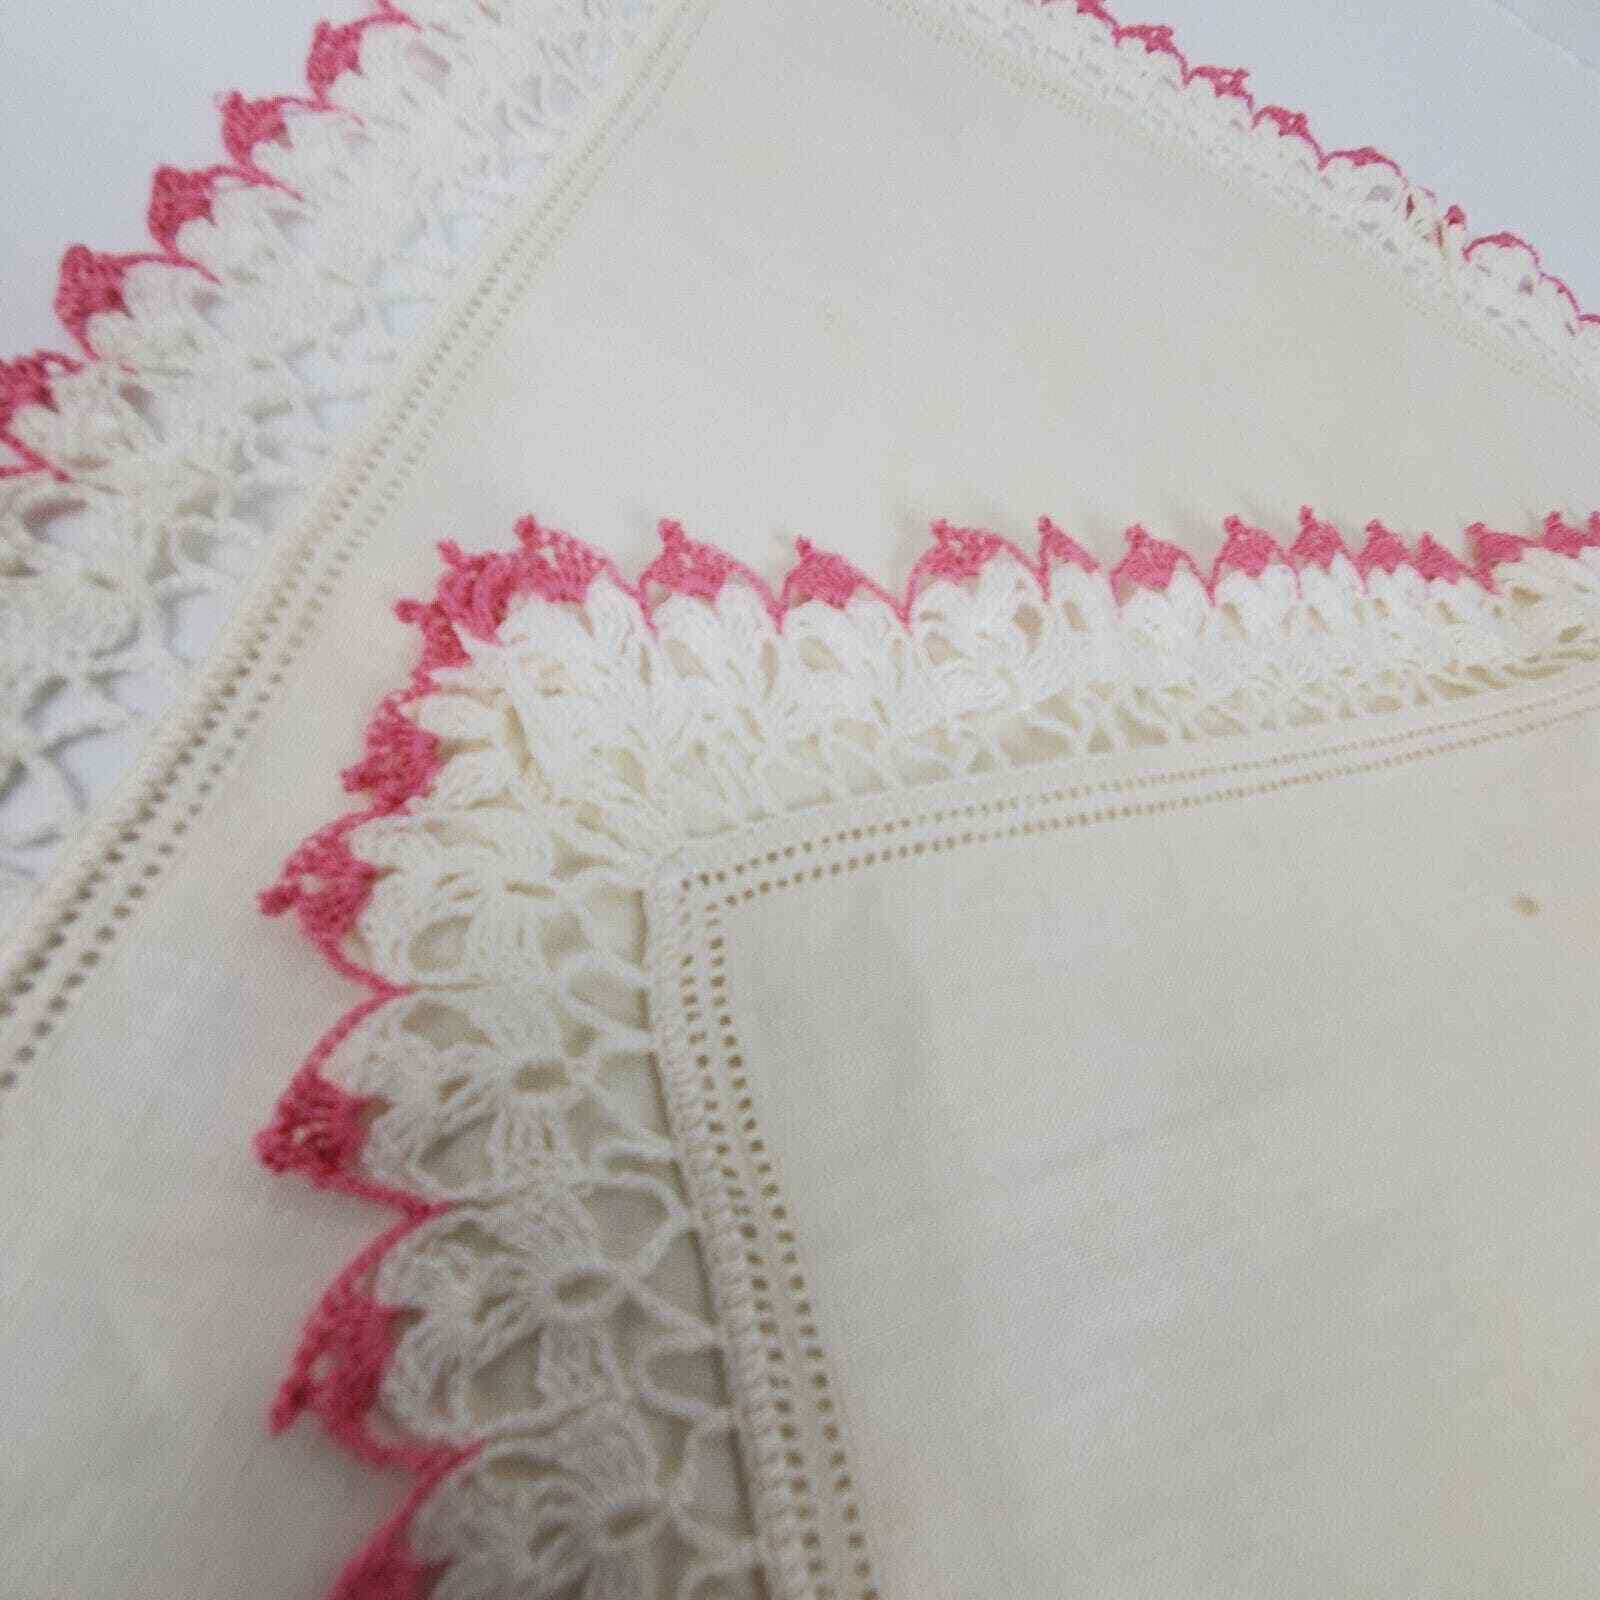 Vintage Crochet Edge Dresser Doily Approximately 13x13 Inch Pink White